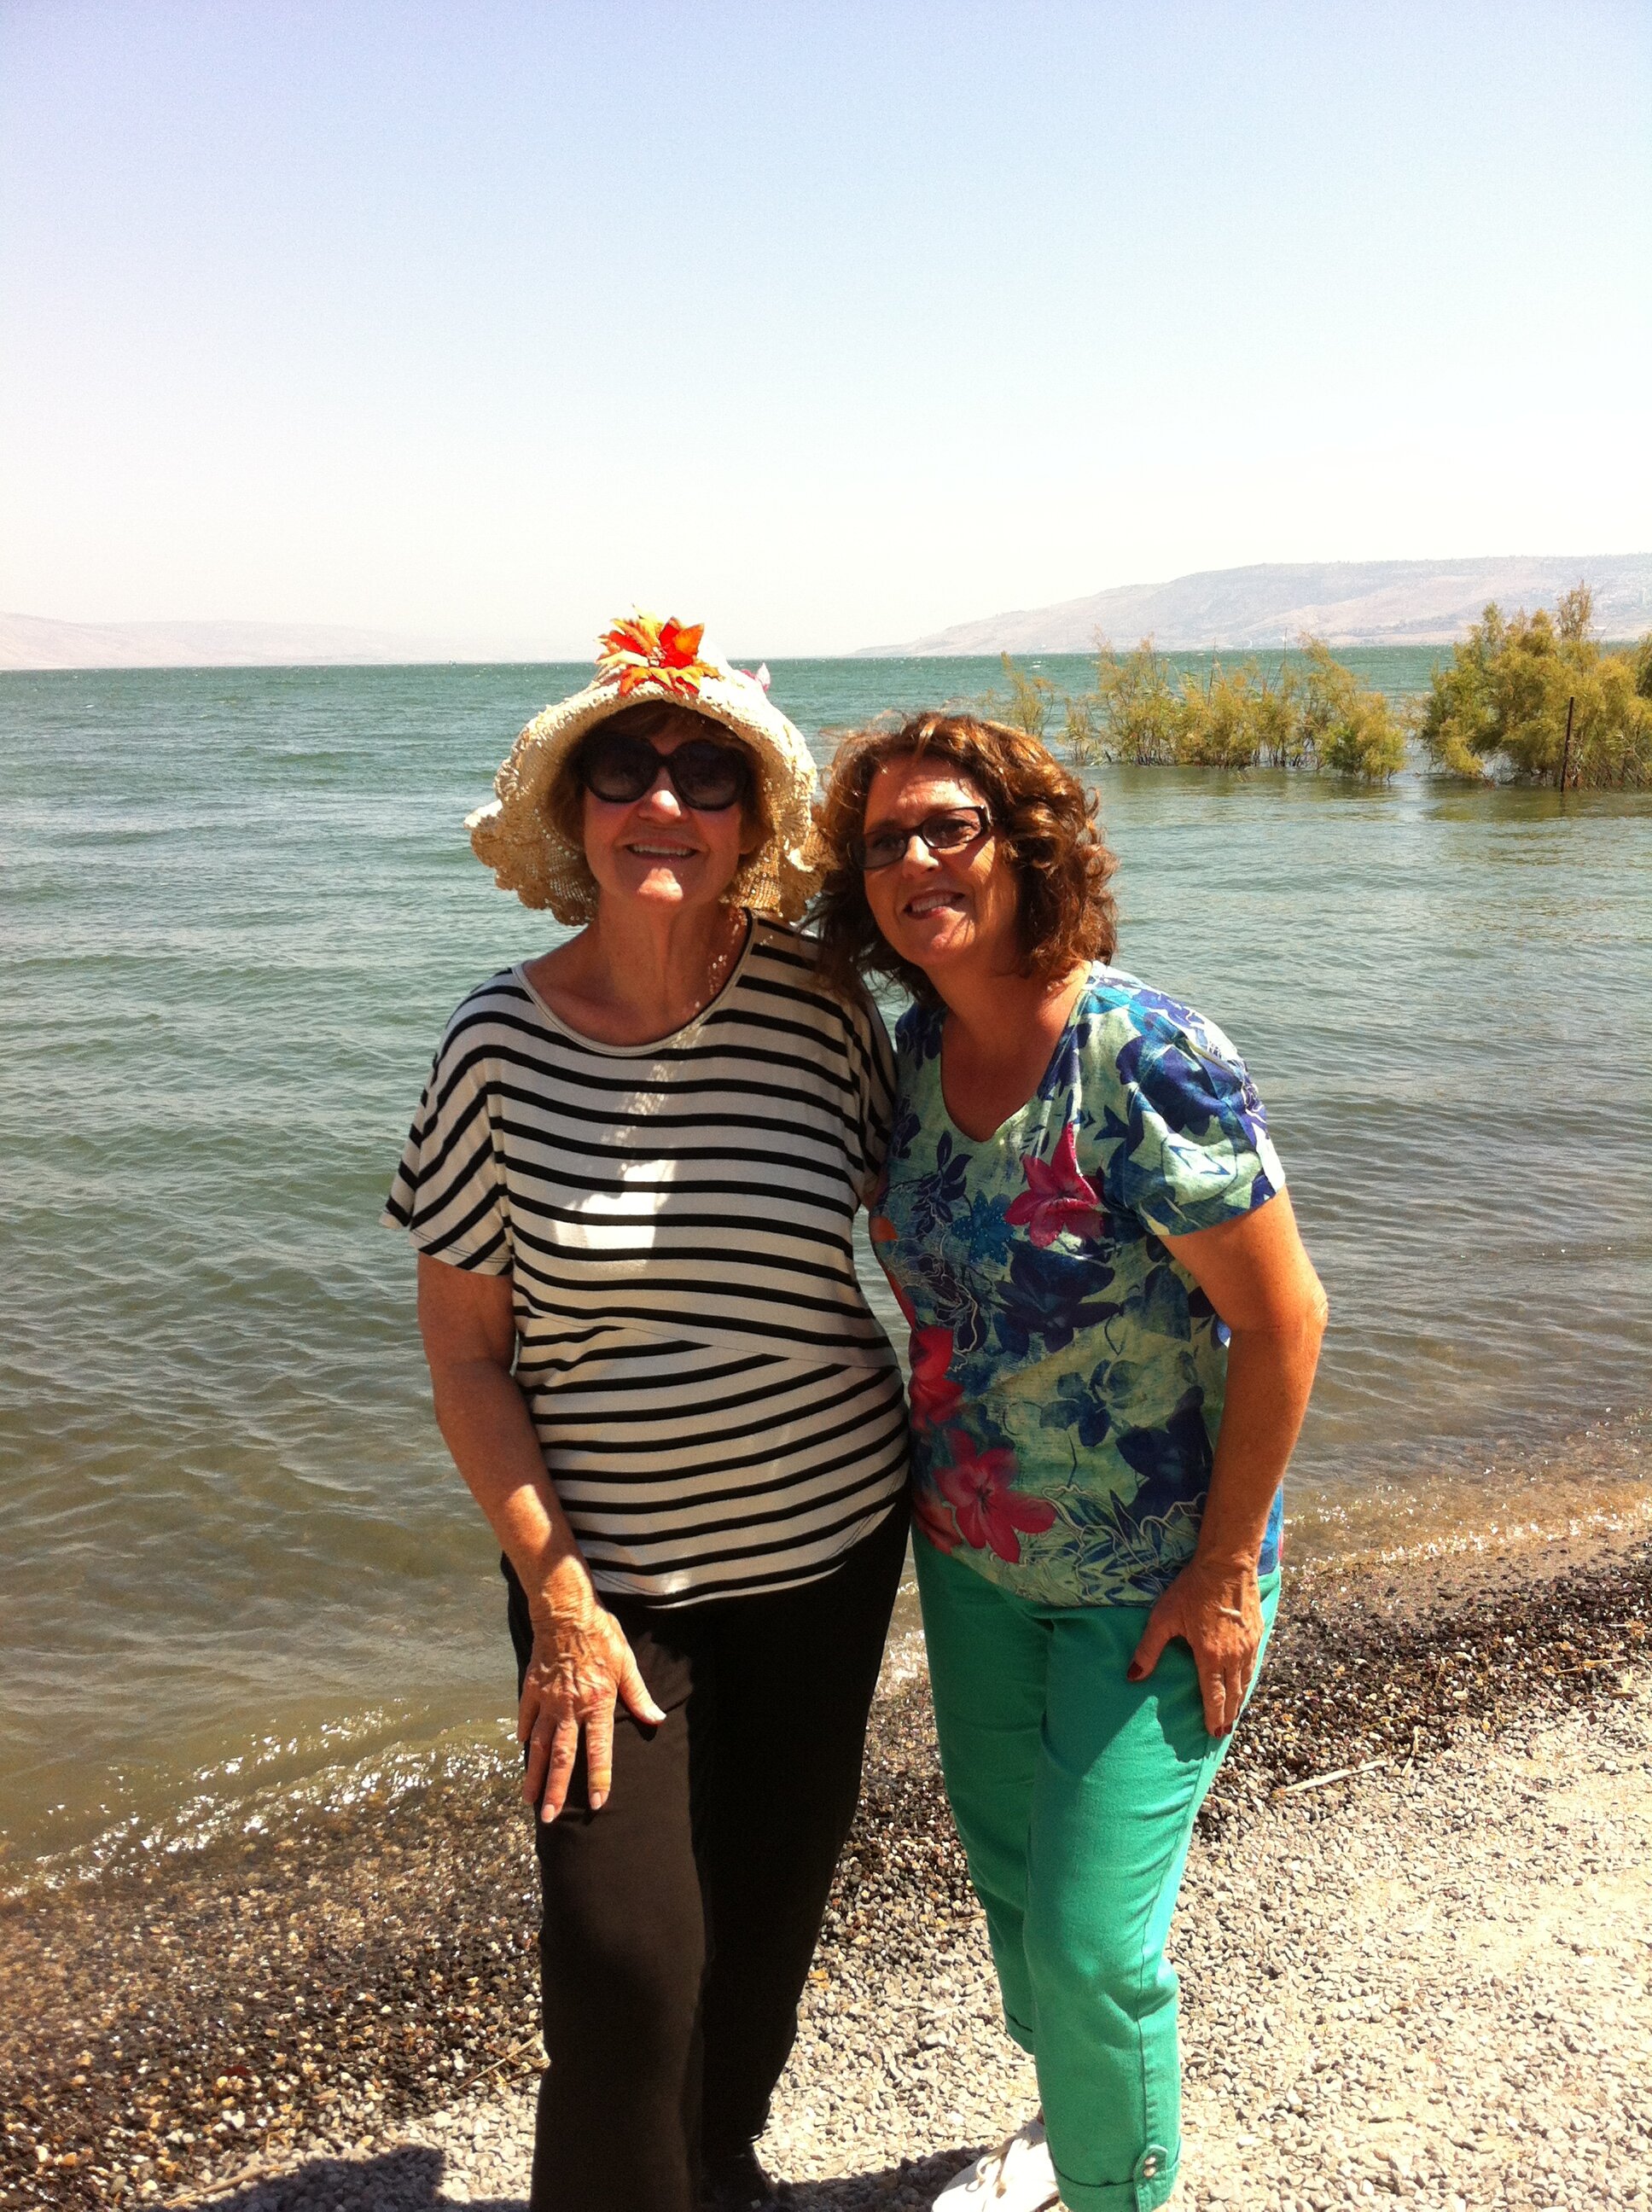  Sea of Galilee 